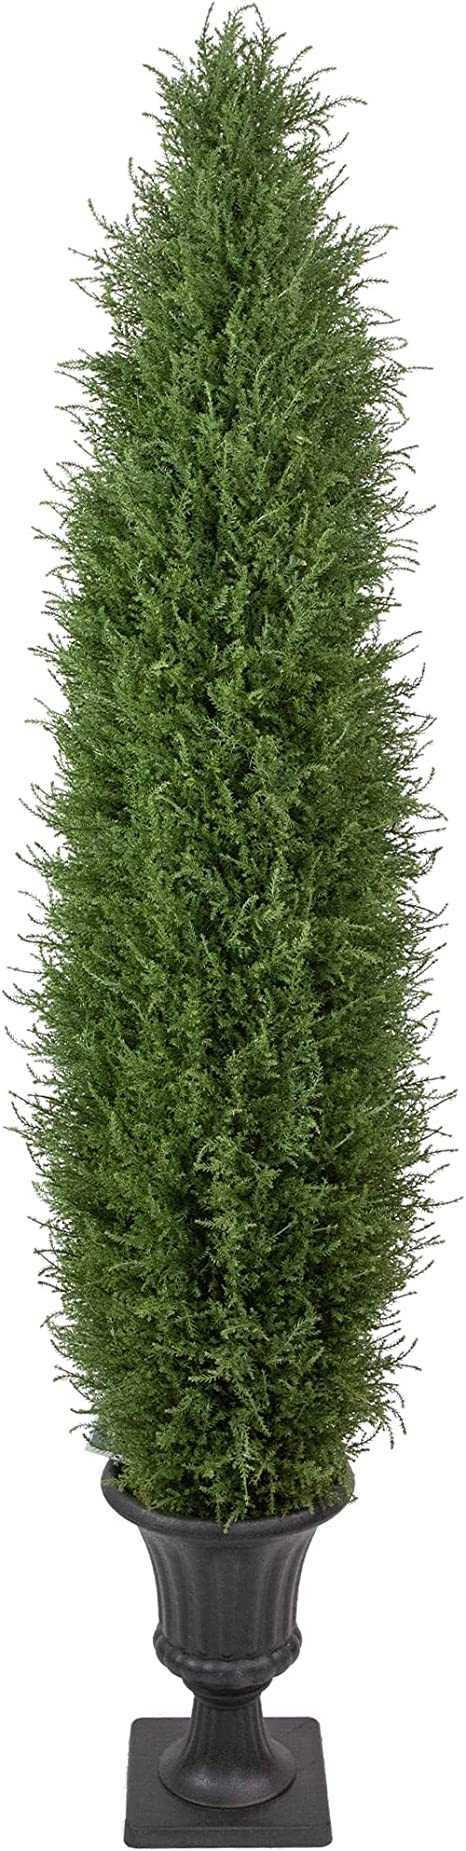 Northlight Artificial Cedar Pine Arborvitae Tree in Urn Style Pot Unlit, 5', Green